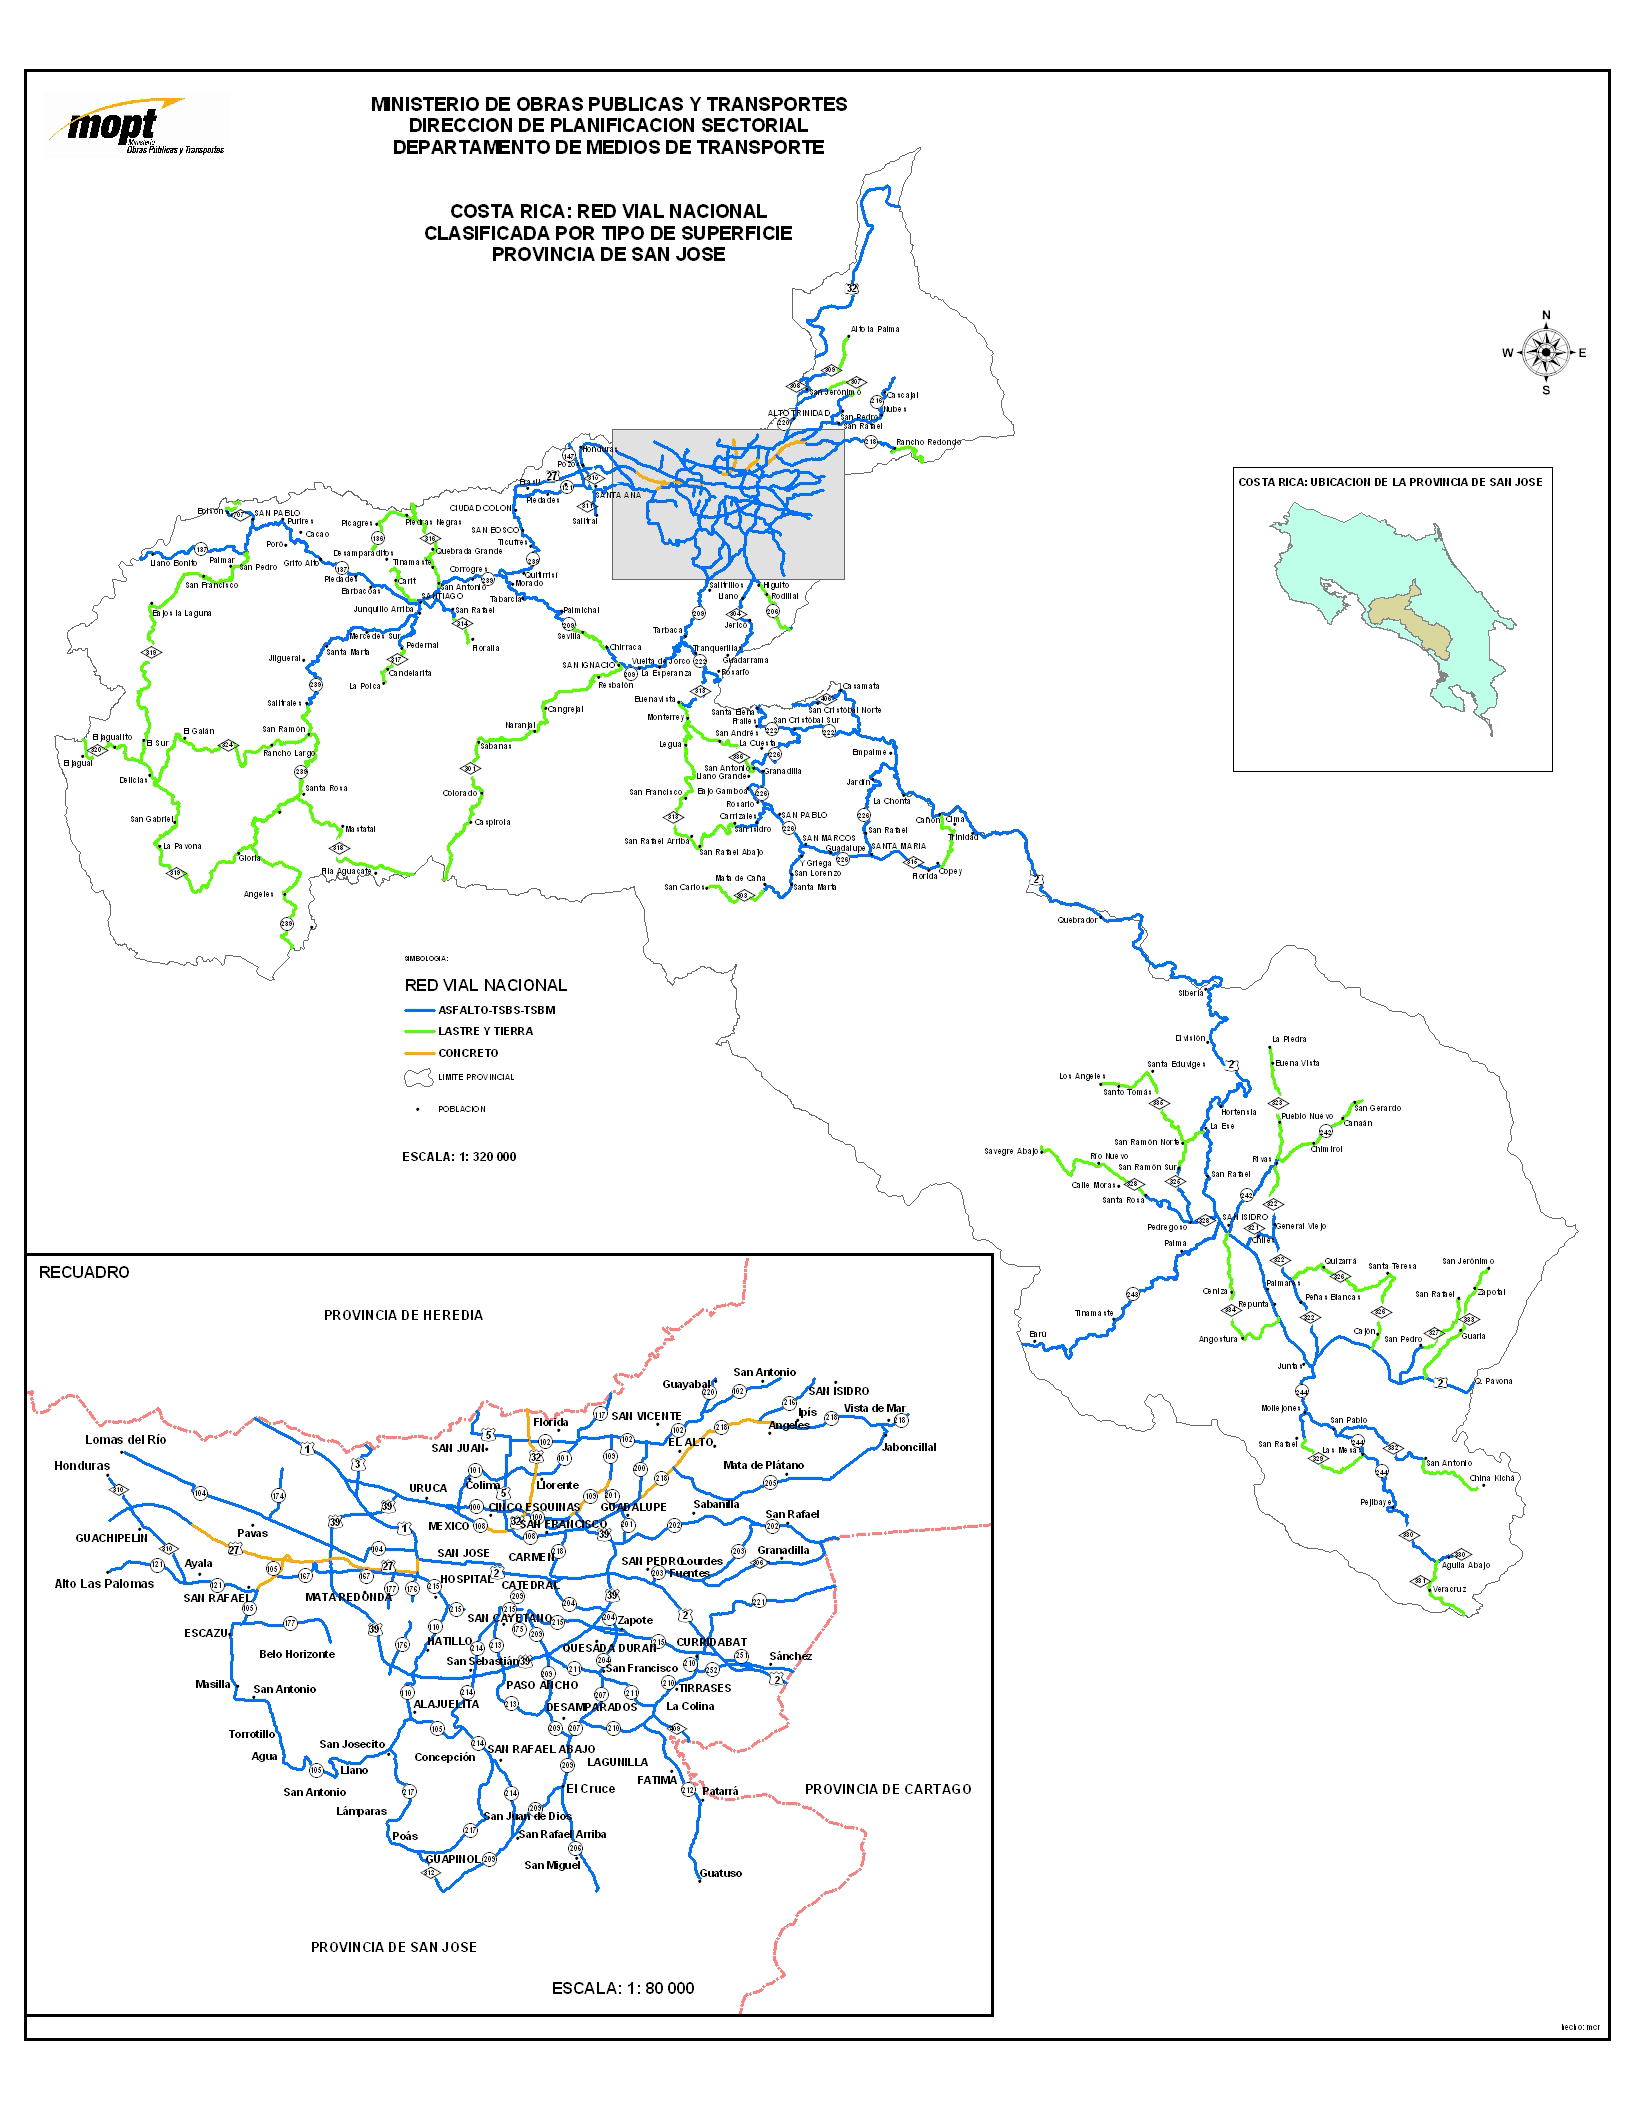 San José Province Roads, Type of Surface Map, Costa Rica